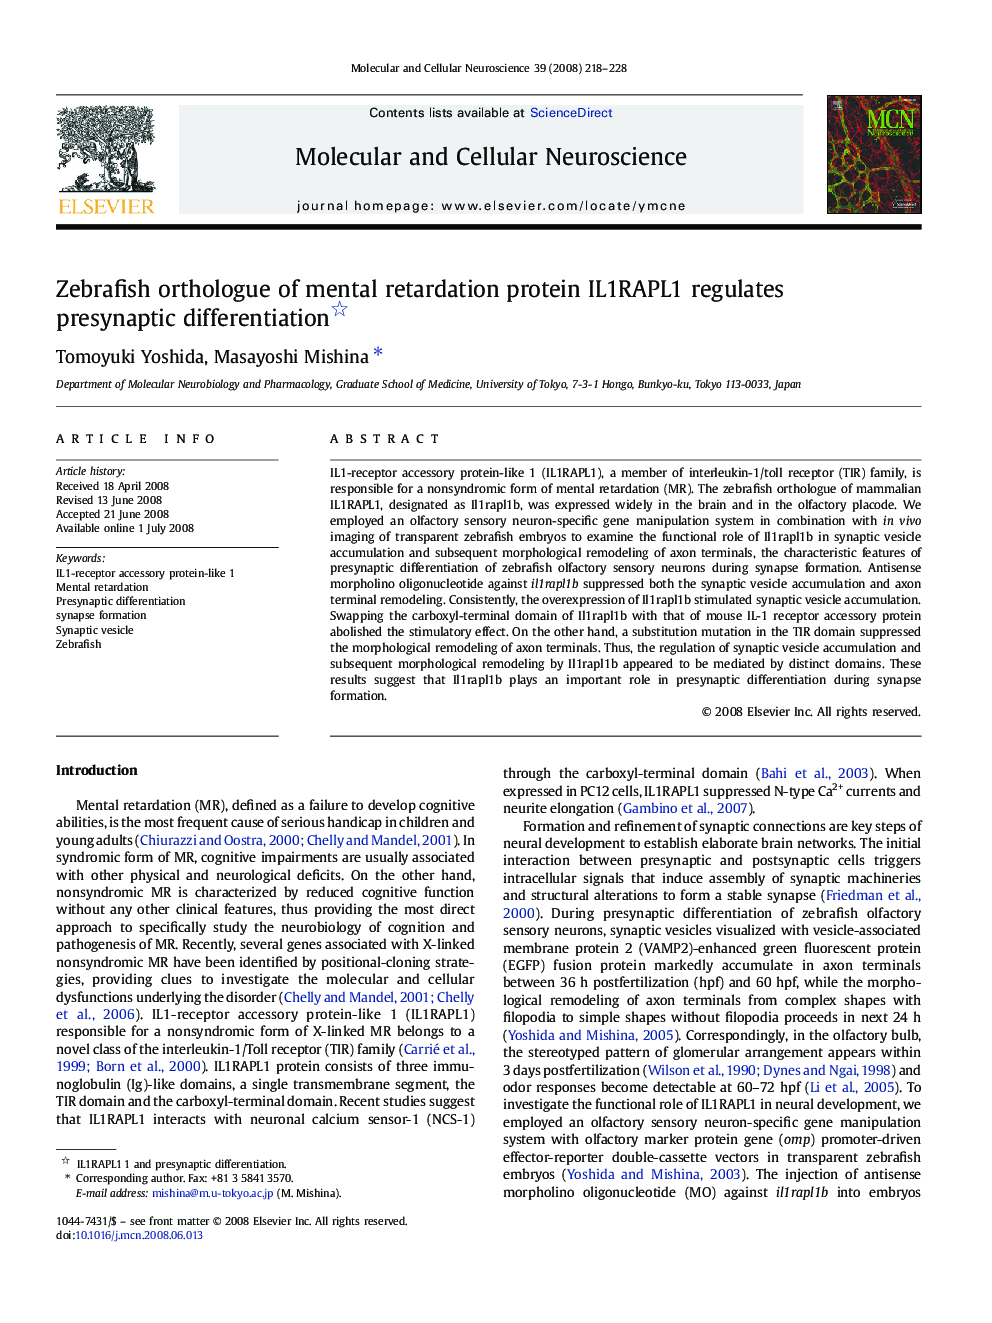 Zebrafish orthologue of mental retardation protein IL1RAPL1 regulates presynaptic differentiation 